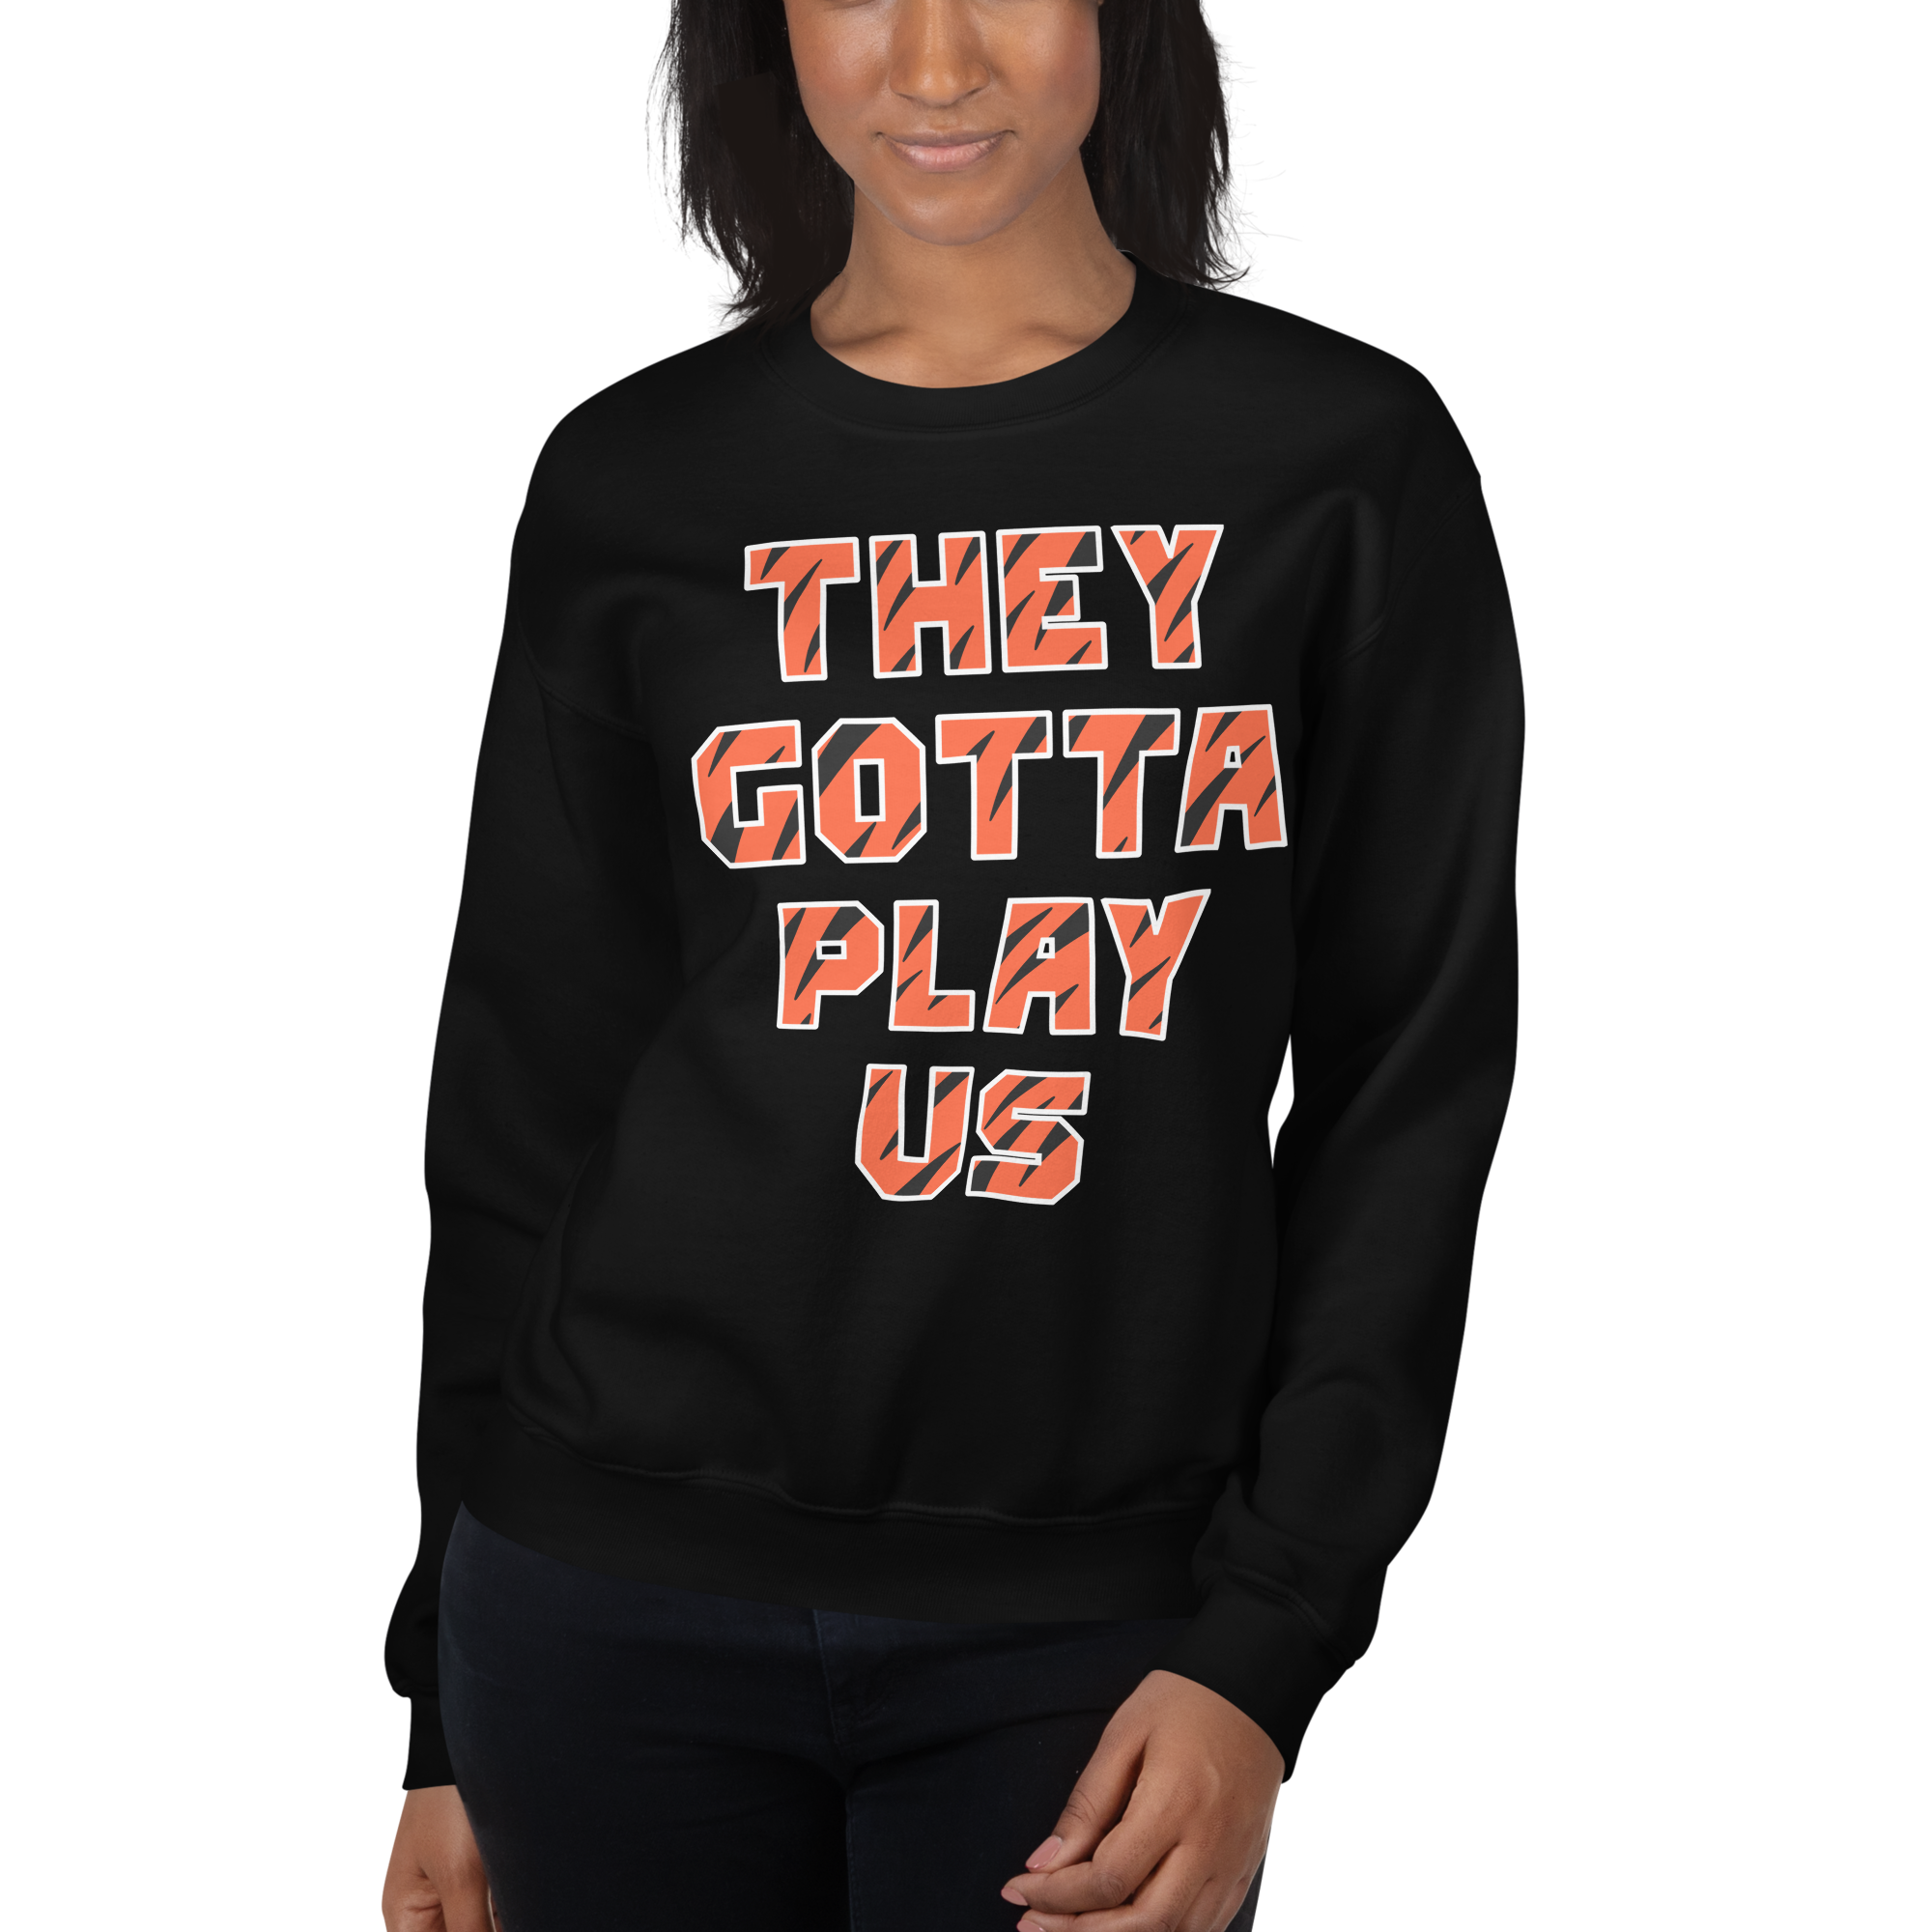 They Gotta Play Us - Sweatshirt